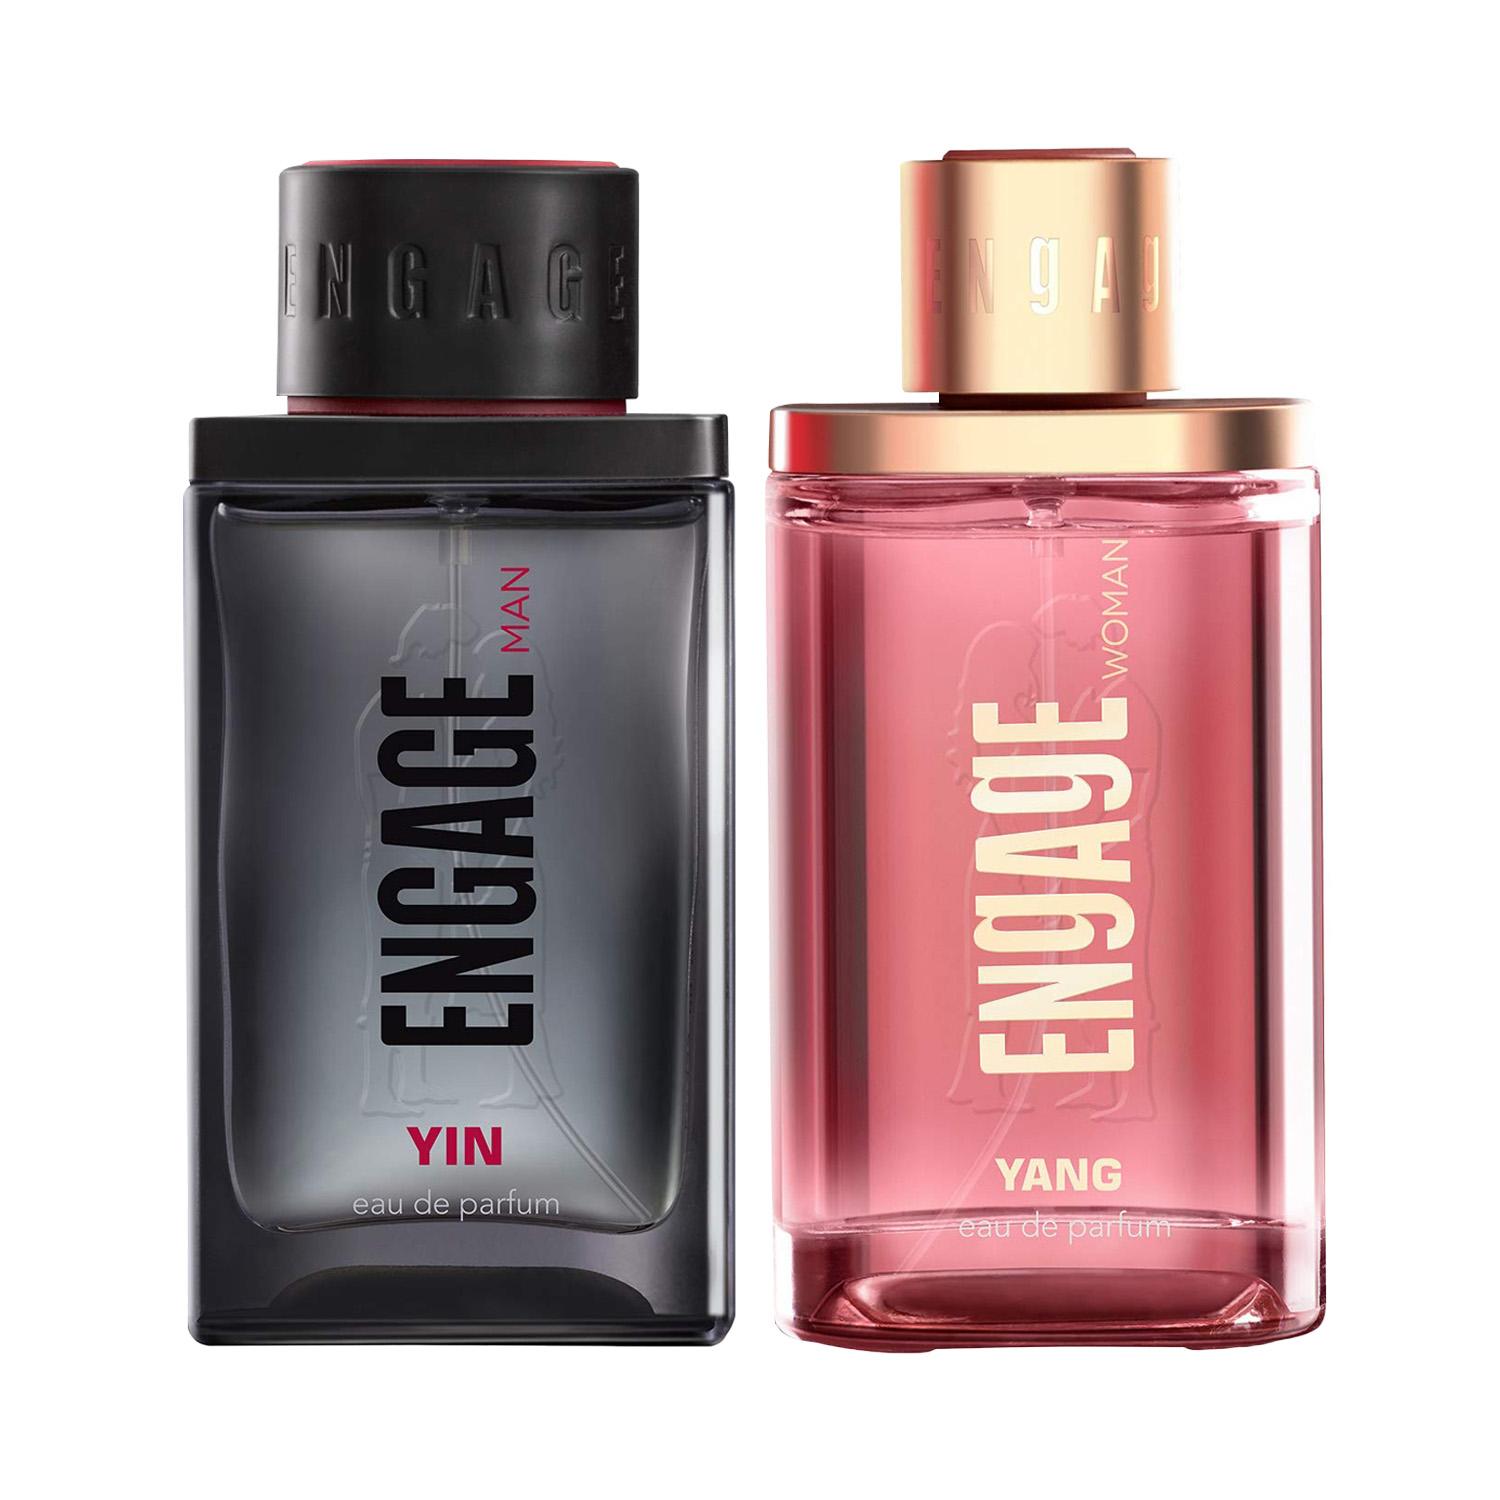 Engage | Engage Premium Perfume Combo Man & Woman (Yin & Yang)